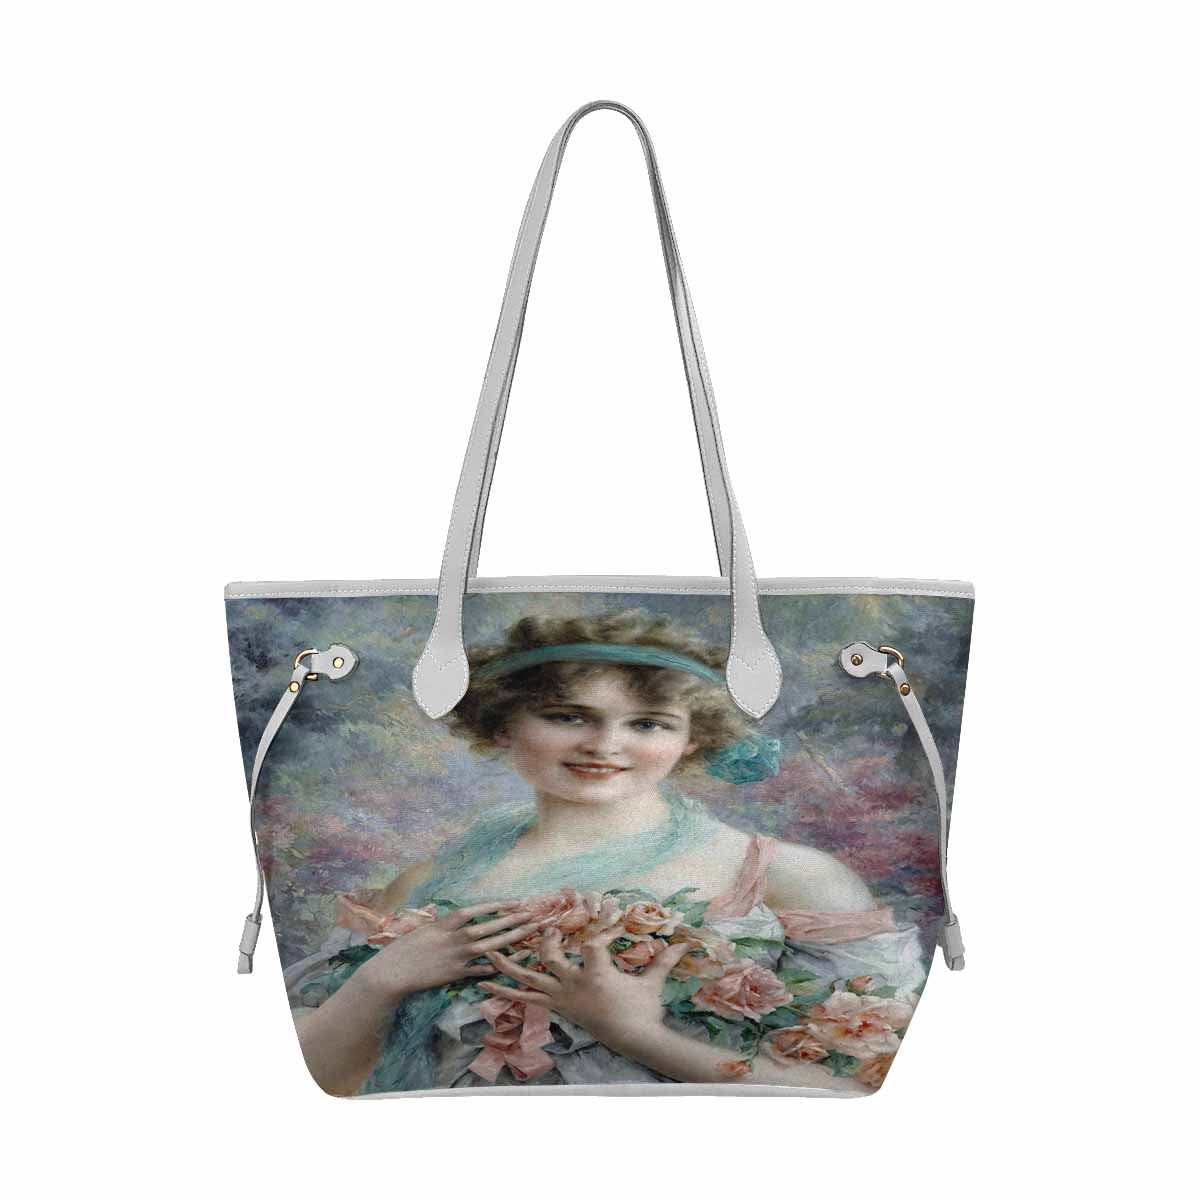 Victorian Lady Design Handbag, Model 1695361, The Rose Girl, WHITE TRIM